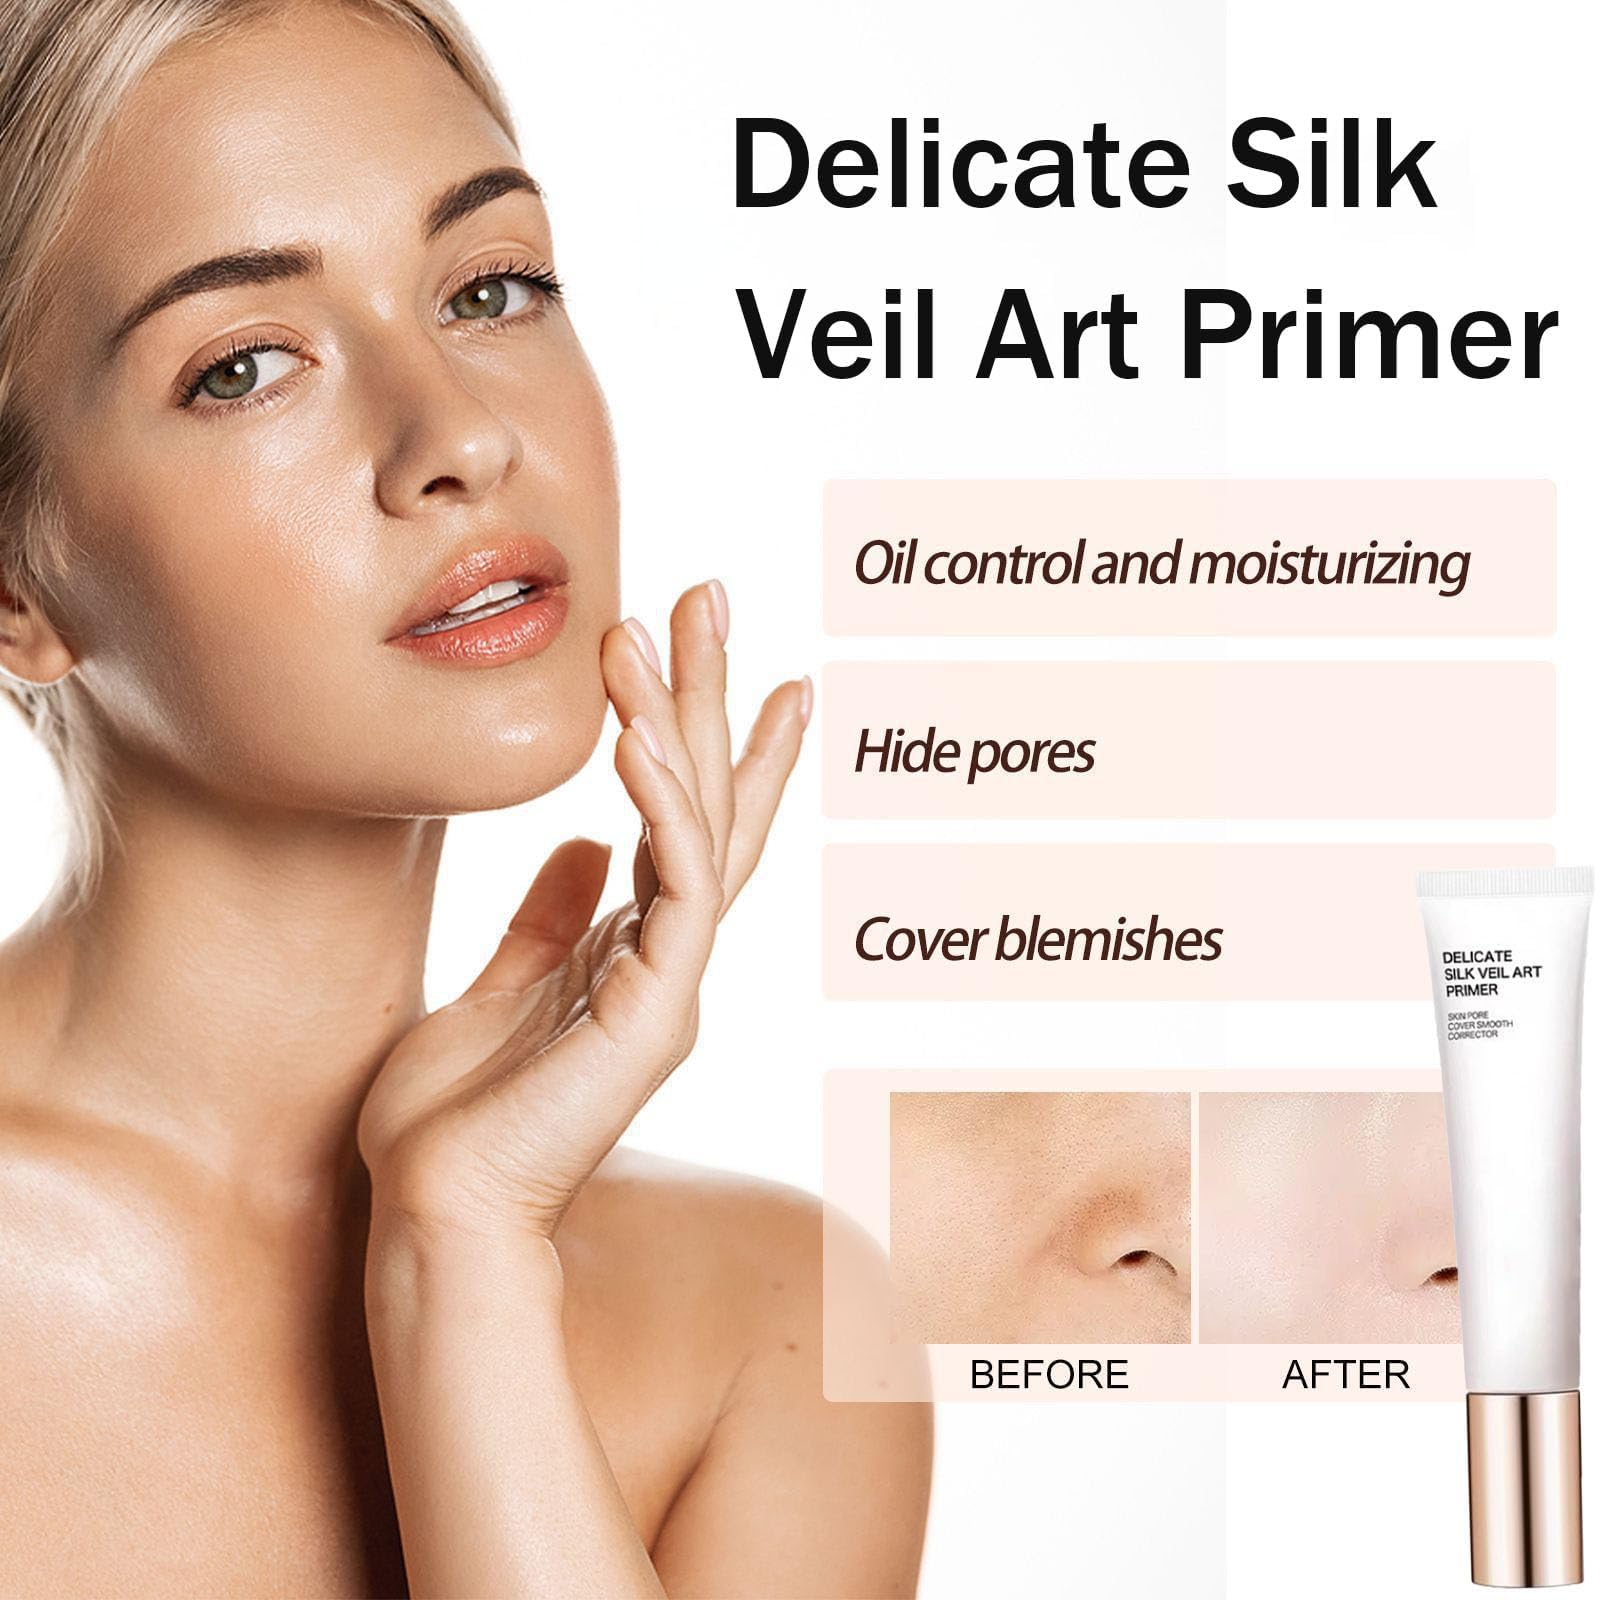 TFIT Delicate Silk Veil Primer